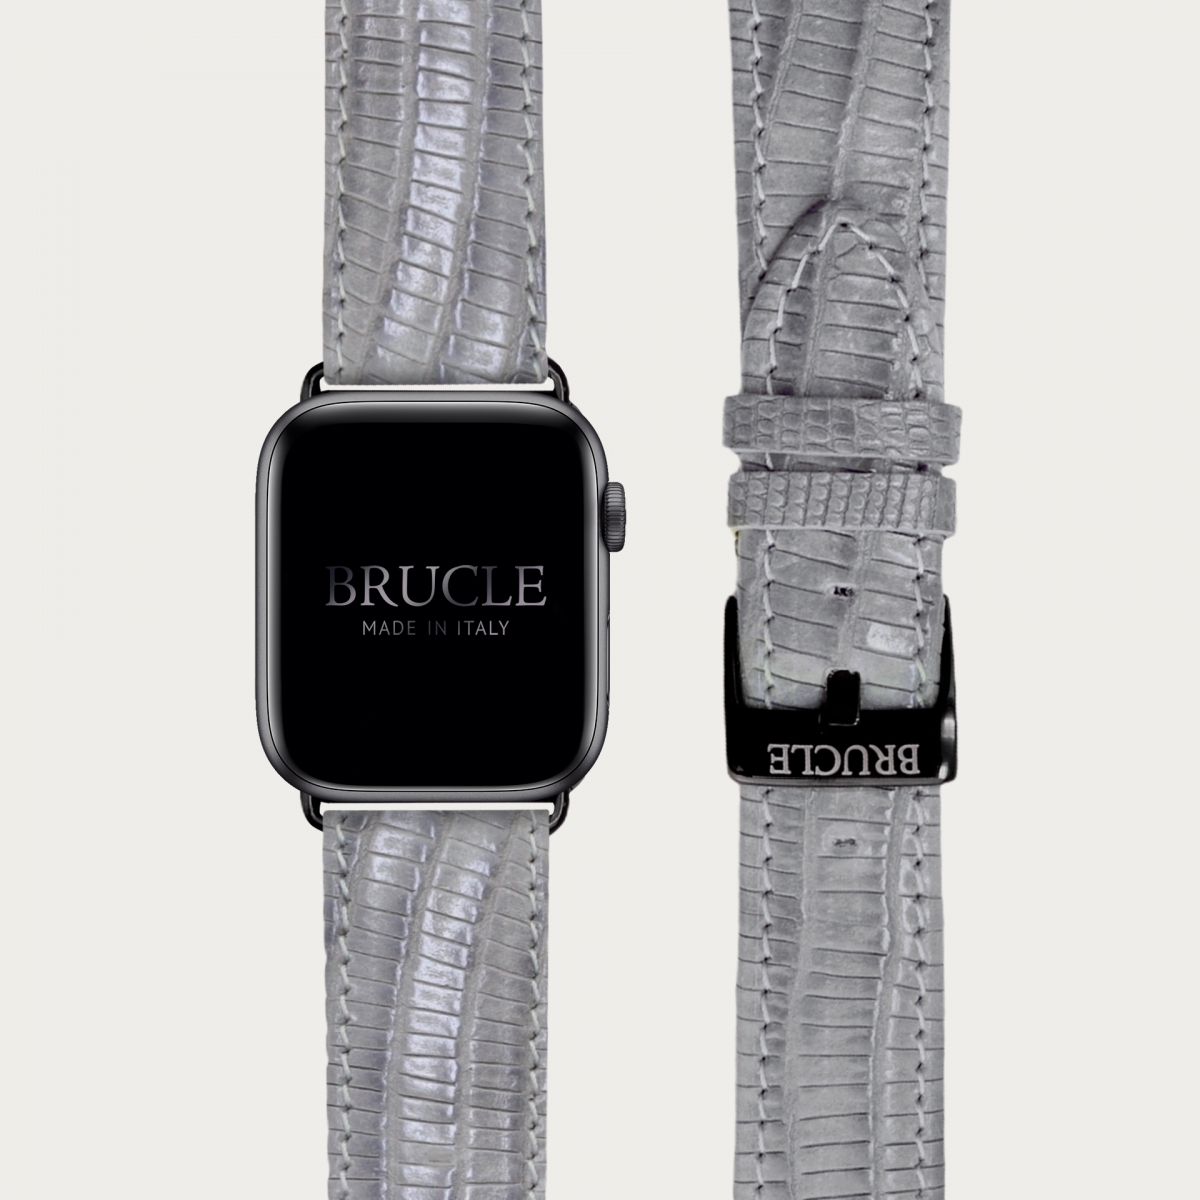 Brucle Armband kompatibel mit Apple Watch / Samsung Smartwatch, grau farbenes Leder mit Tejus-Print